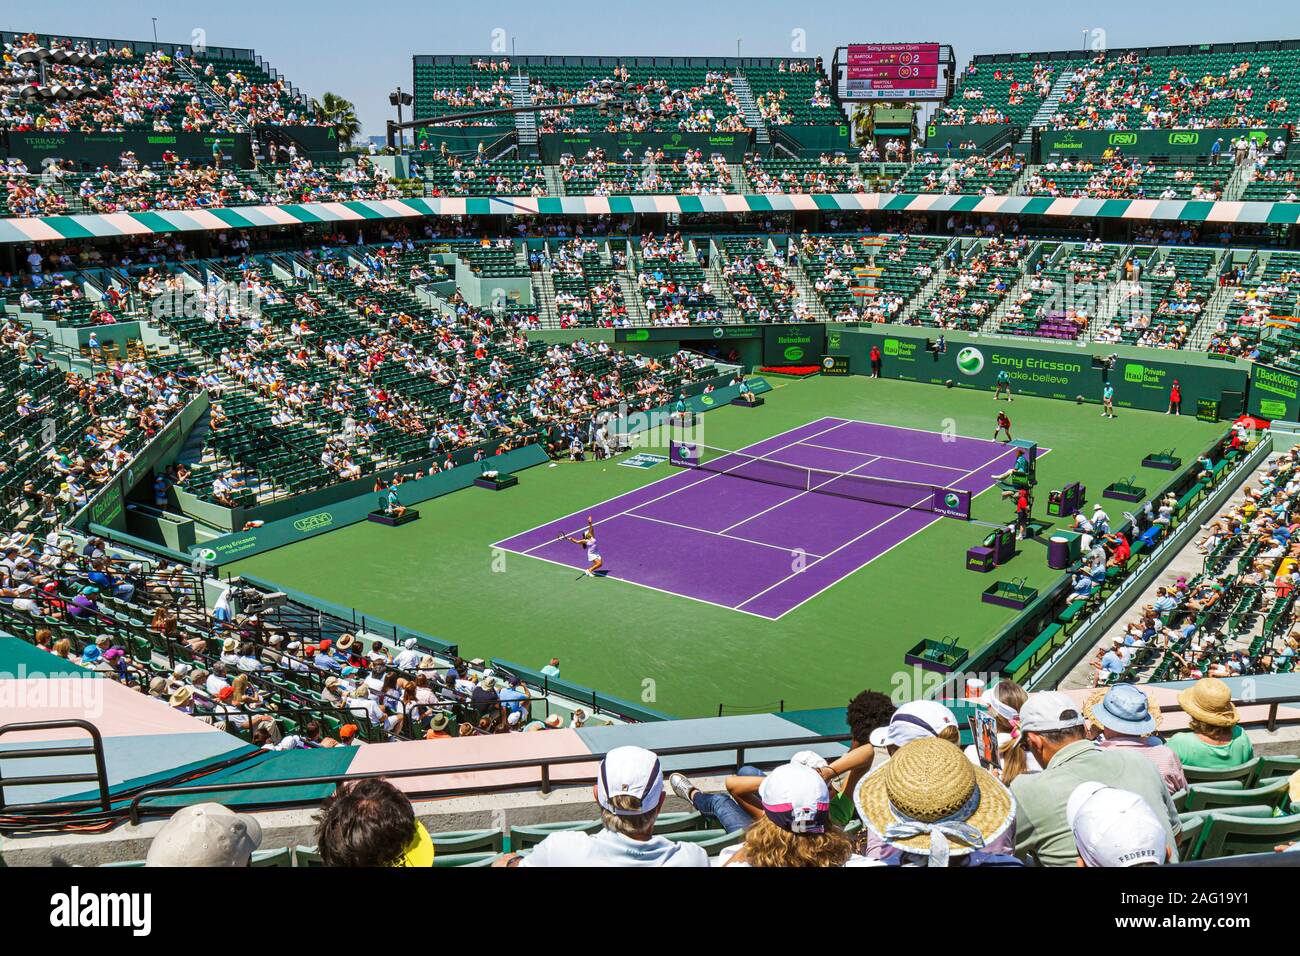 Miami Florida,Key Biscayne,Sony Ericsson OpenAL torneo di tennis,stadio sportivo,mezzo pieno vuoto,tifosi,Venus Williams,FL100405028 Foto Stock